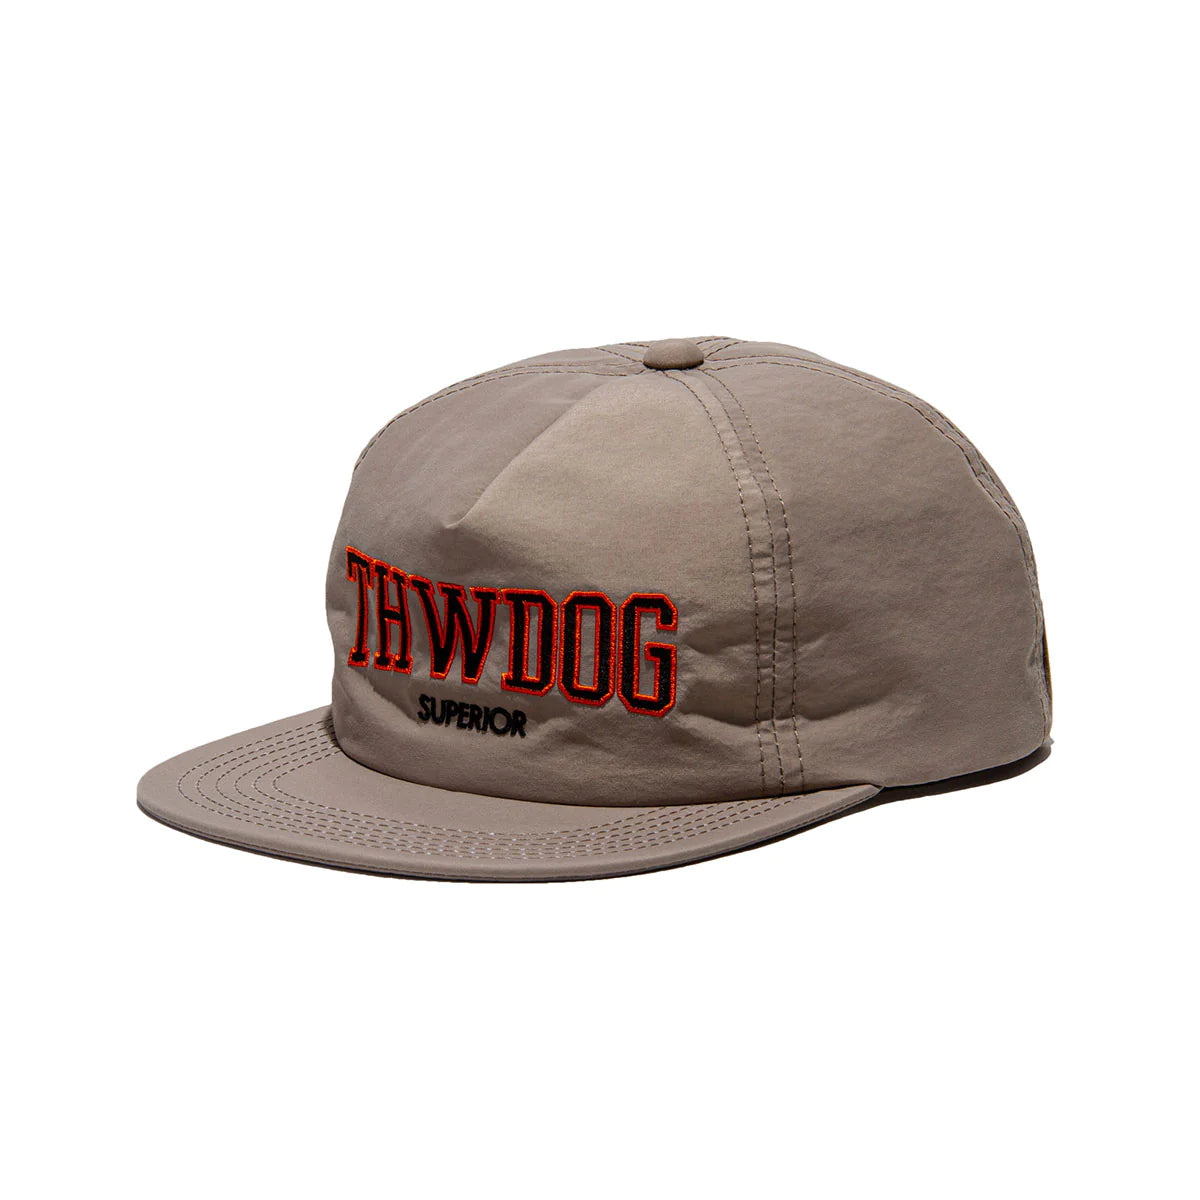 THE H.W.DOG\u0026CO. TRUCKER CAP-D 今市 | hartwellspremium.com